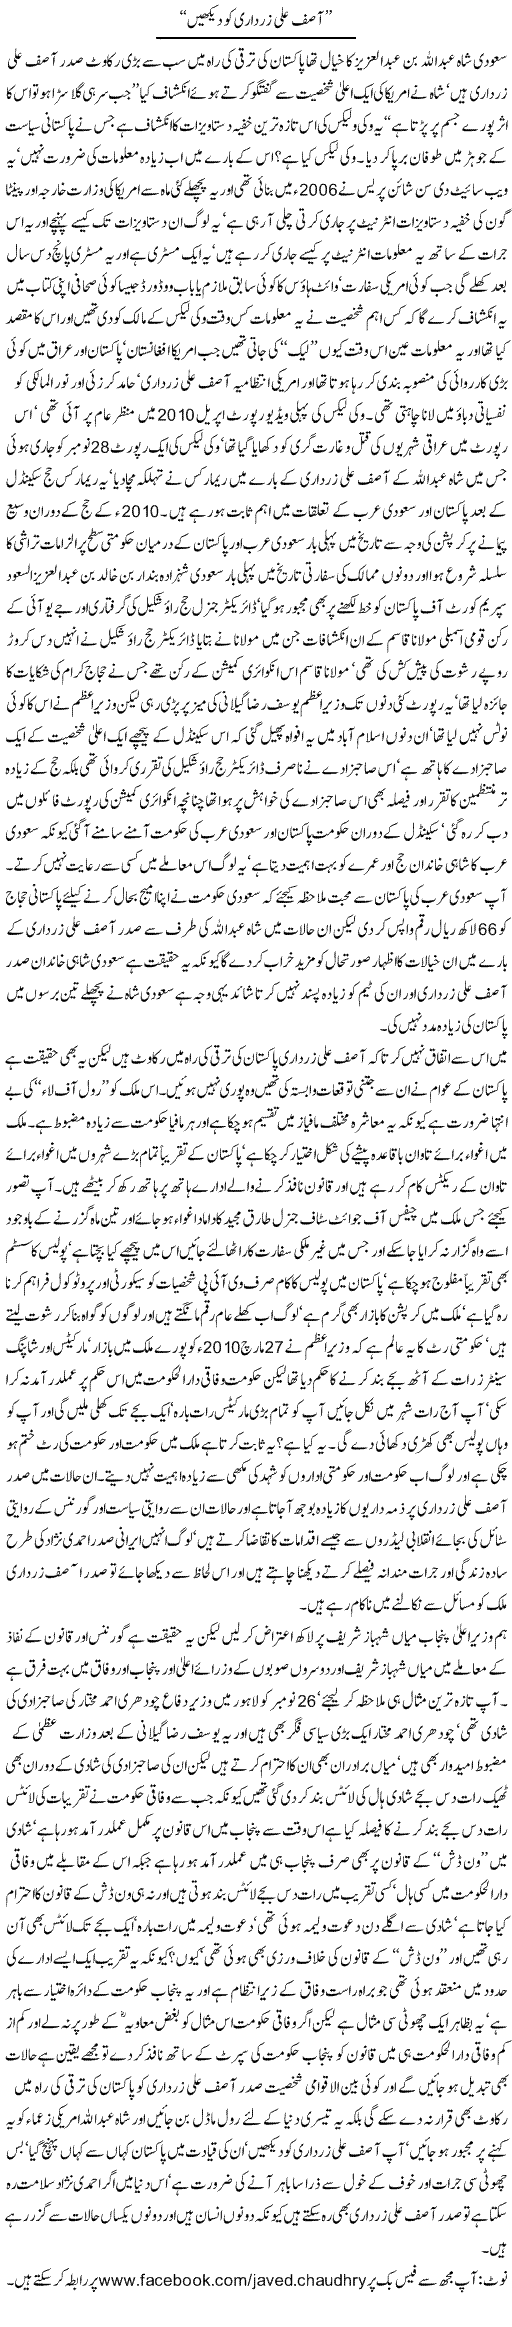 Watch Zardari Express Column Javed Chaudhry 30 November 2010